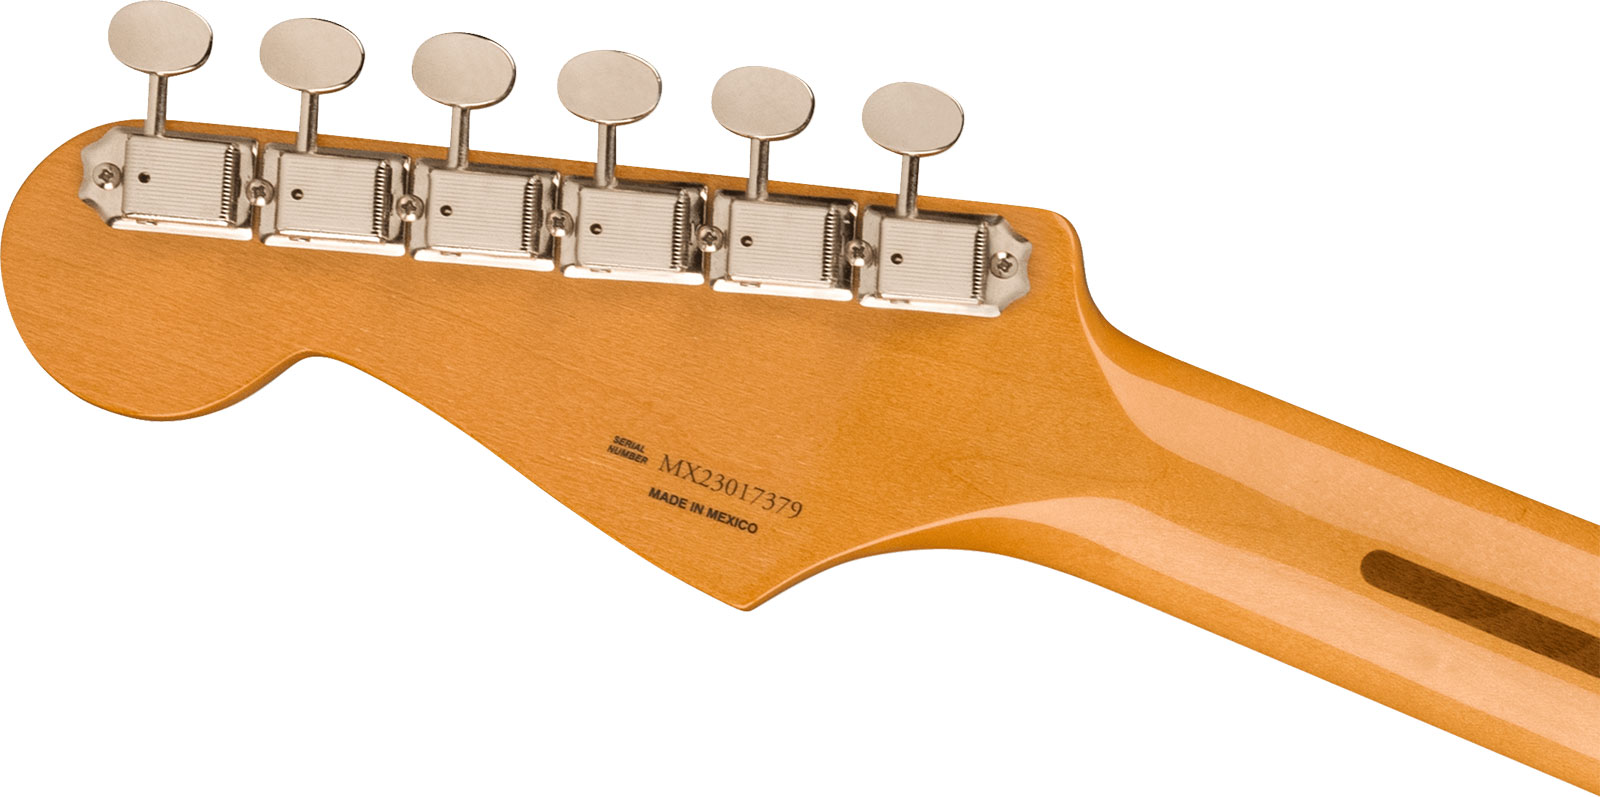 Fender Strat 50s Vintera 2 Mex 3s Trem Mn - 2-color Sunburst - Guitare Électrique Forme Str - Variation 3